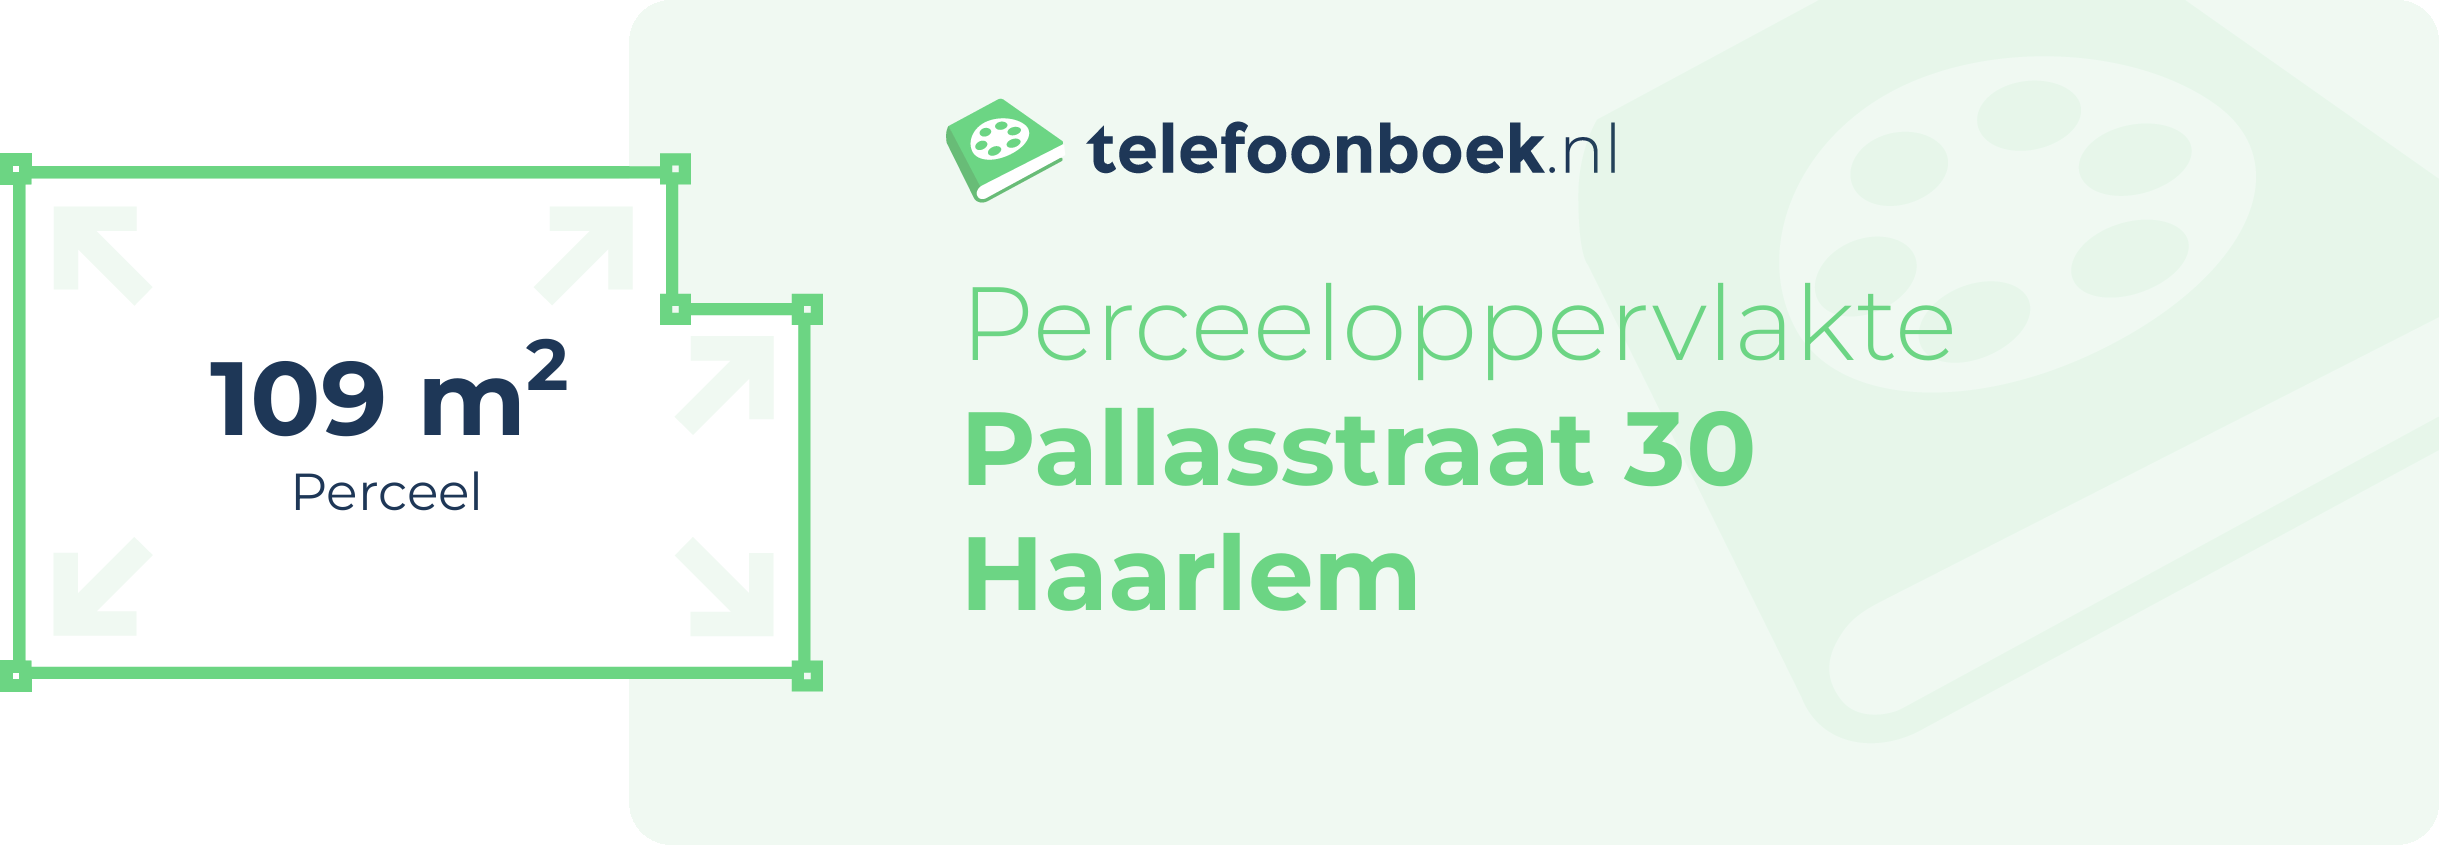 Perceeloppervlakte Pallasstraat 30 Haarlem